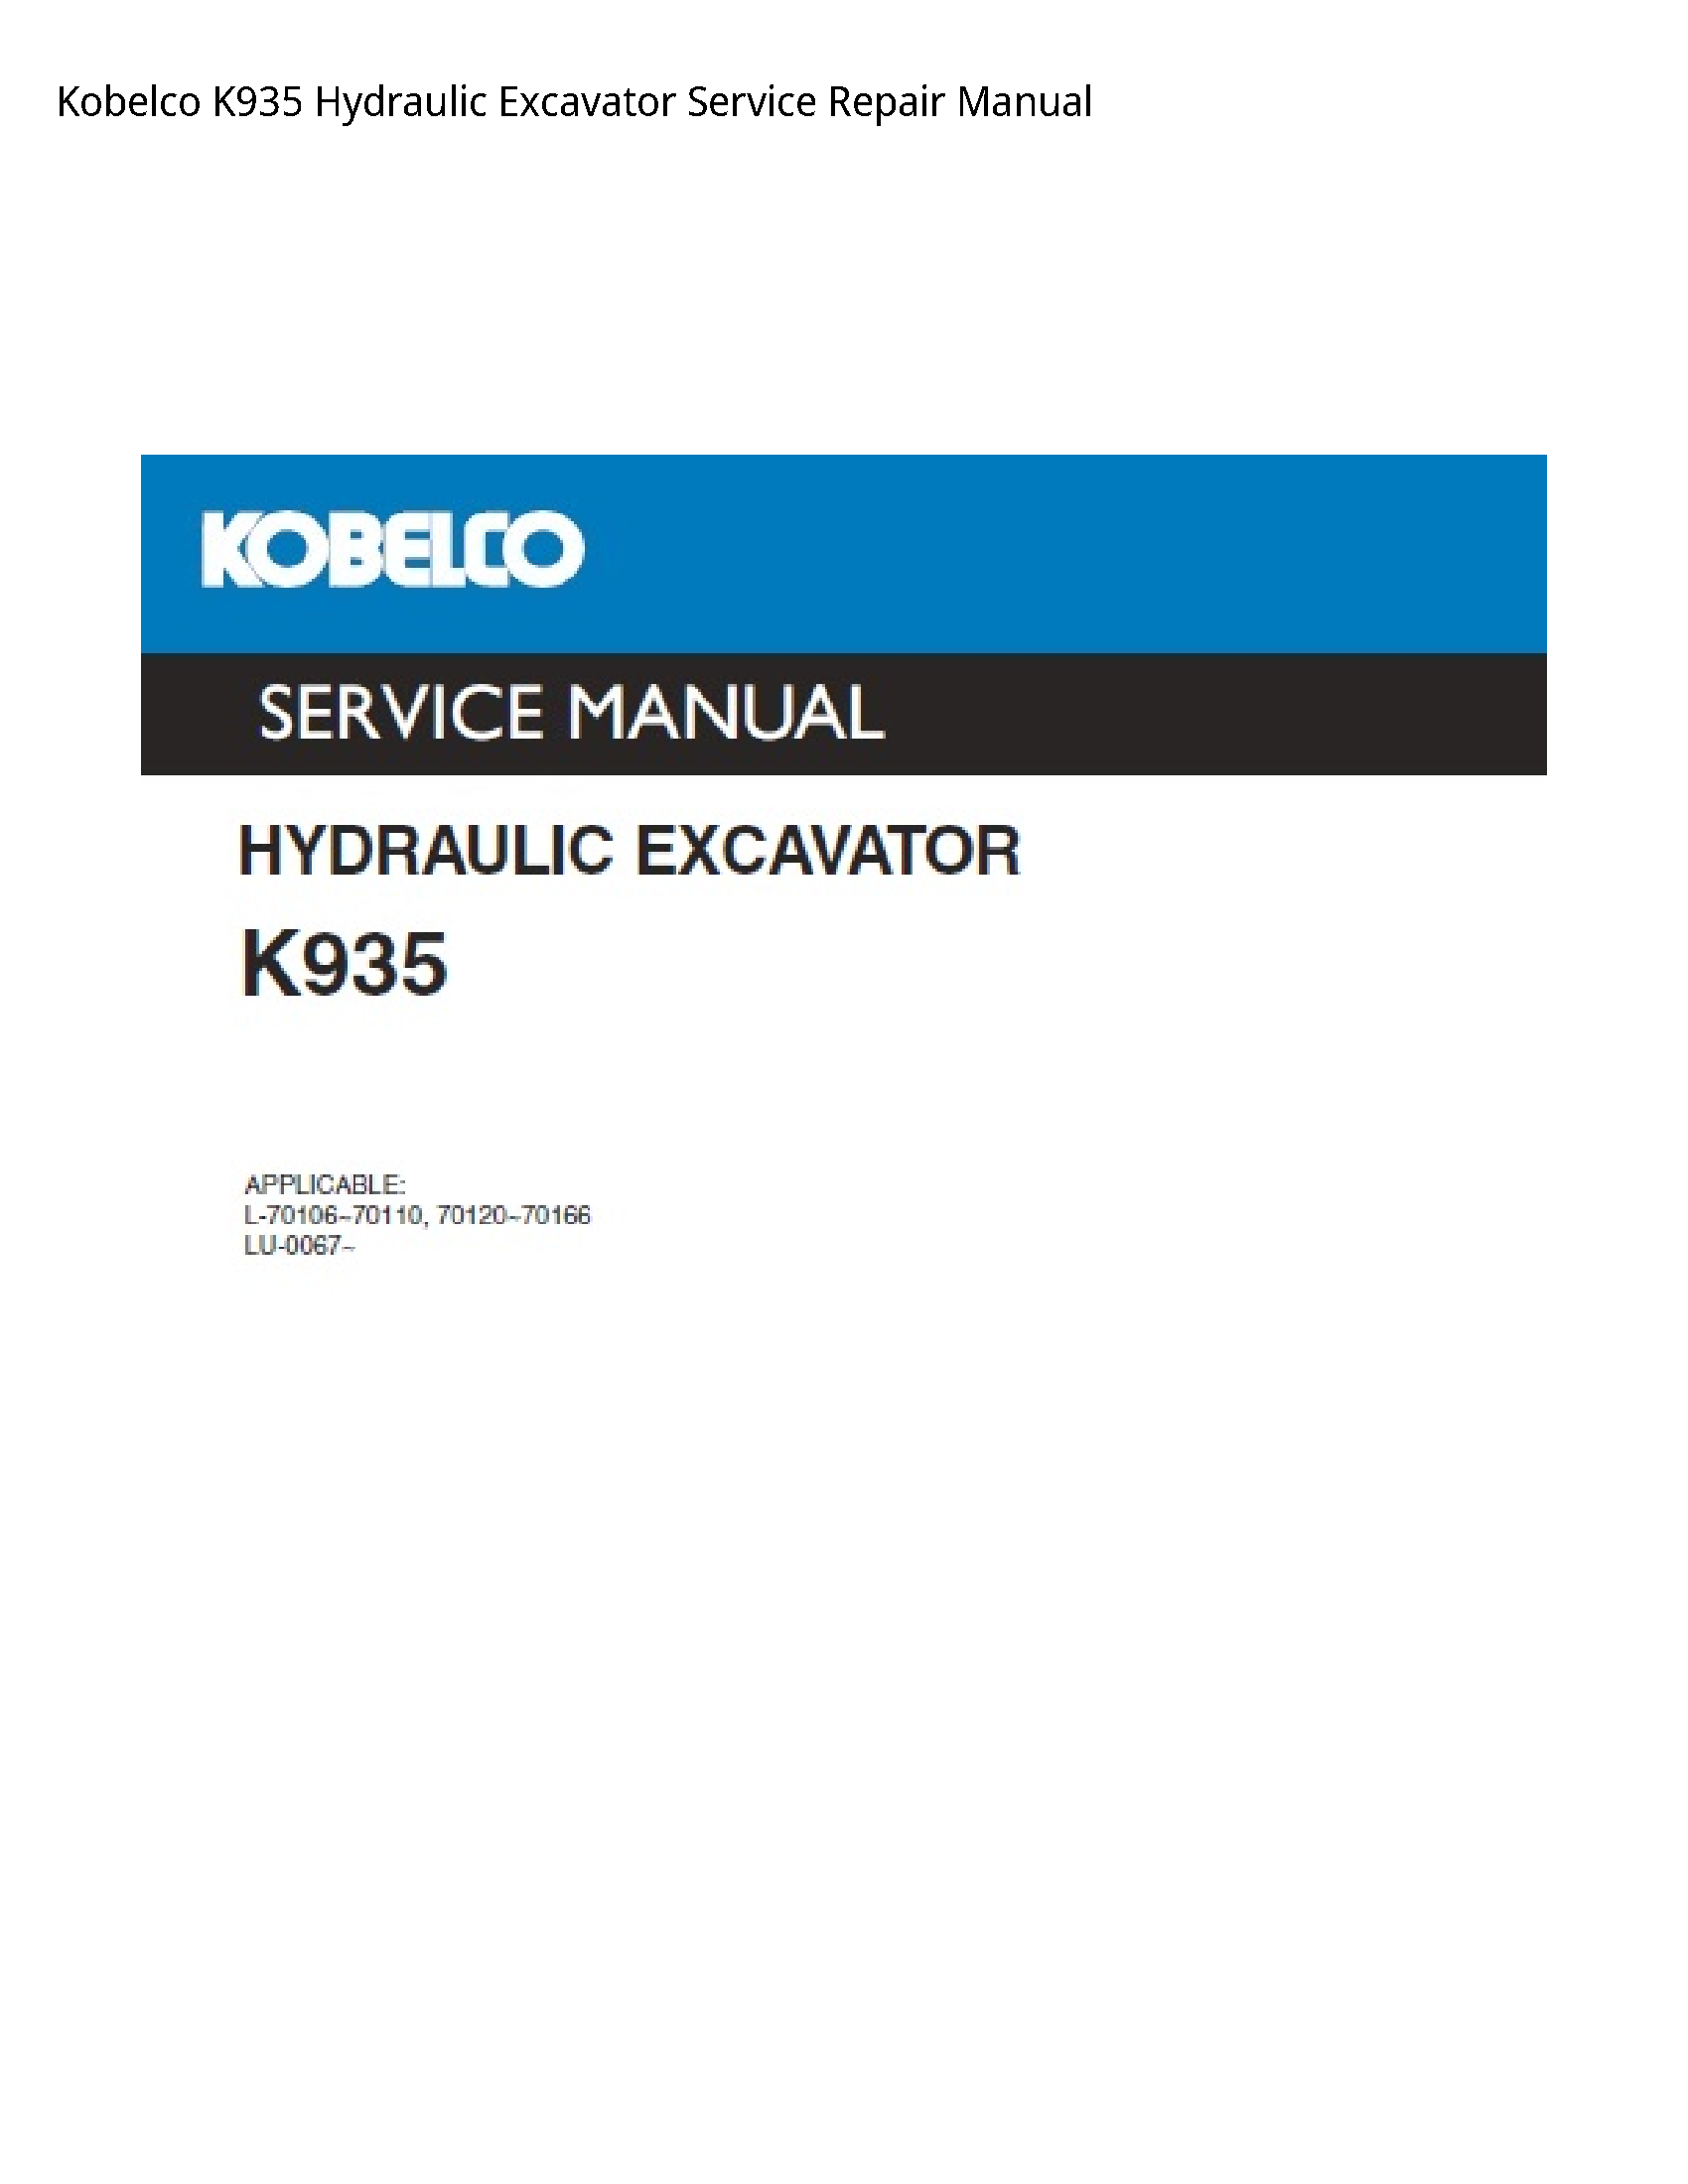 Kobelco K935 Hydraulic Excavator manual